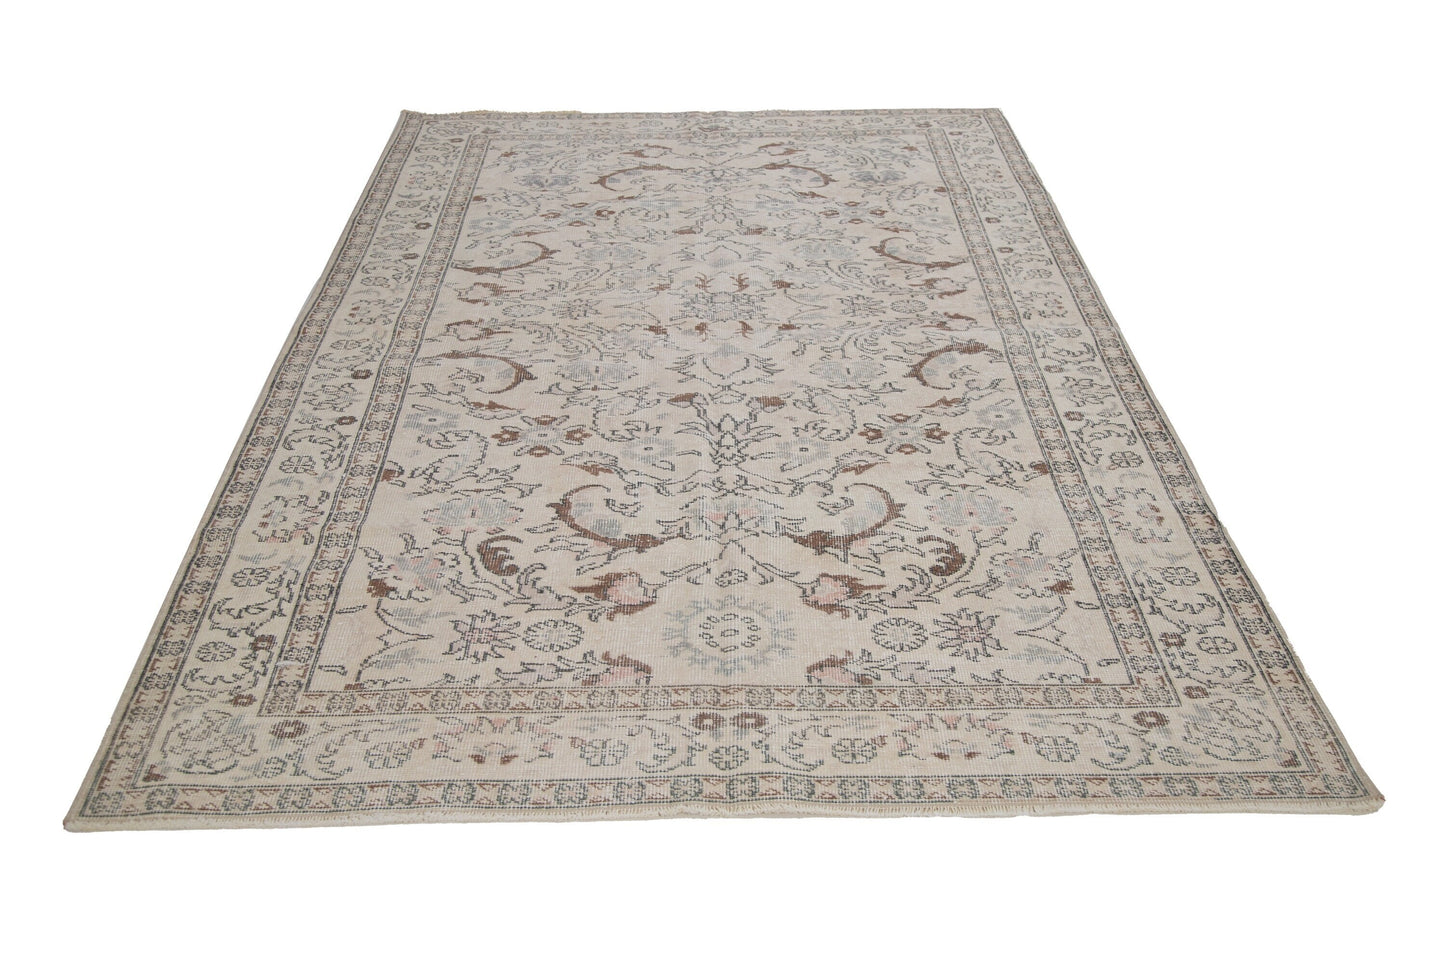 Rug 6x9,Area Turkish rug 6x9, Neutral Oushak rug,Vintage rug,Beige rug 6x9,One of a kind rug,Contemporary,Living room rug,7391